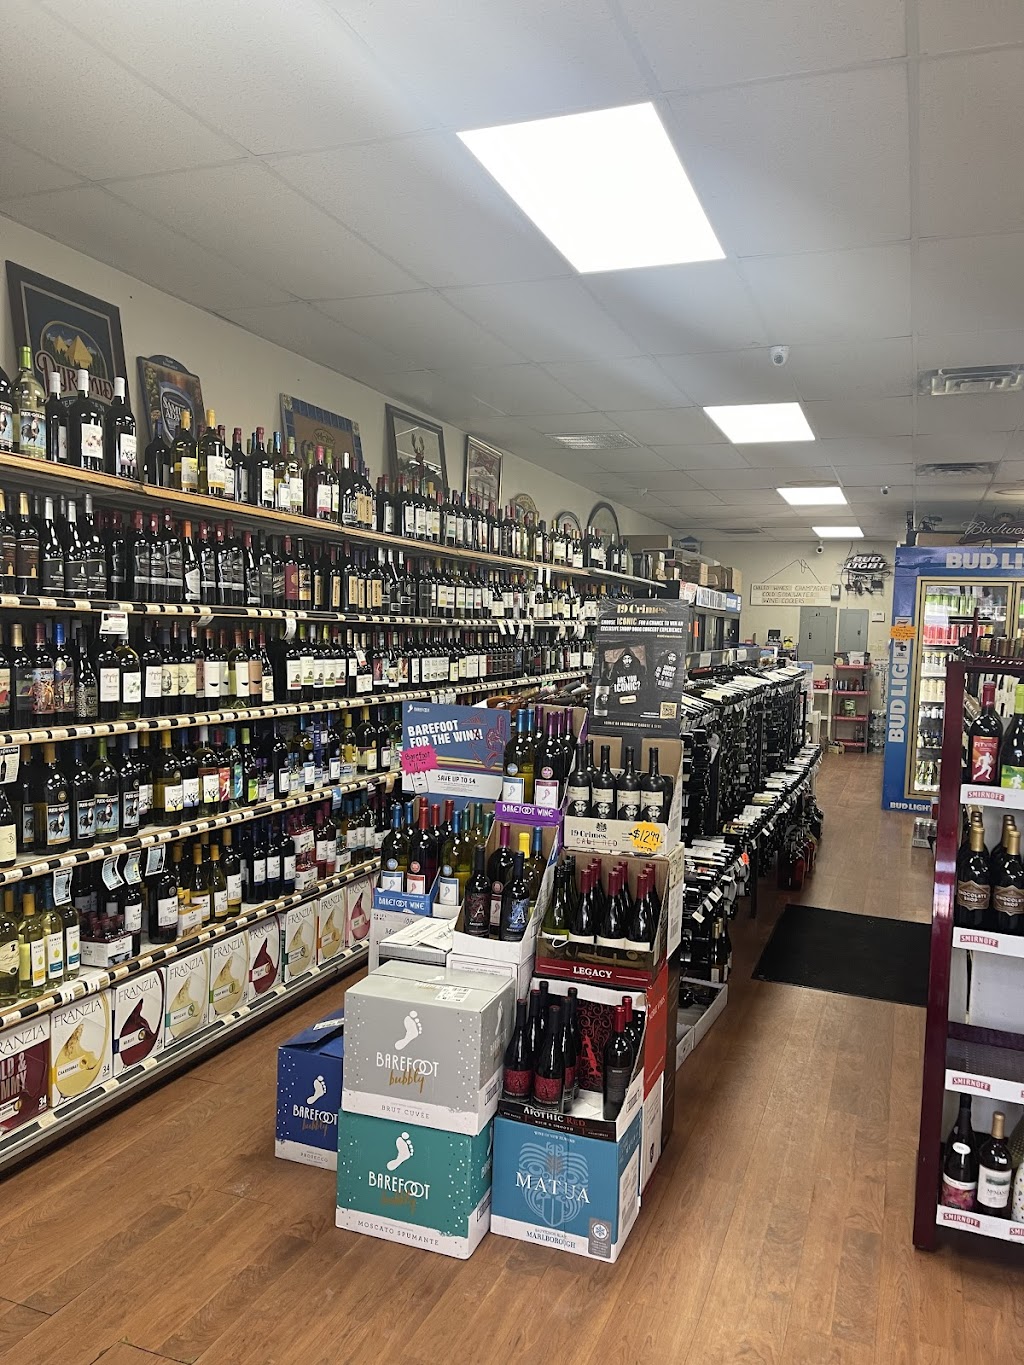 Valley Liquors | 1221 New Haven Rd, Naugatuck, CT 06770 | Phone: (203) 720-0247